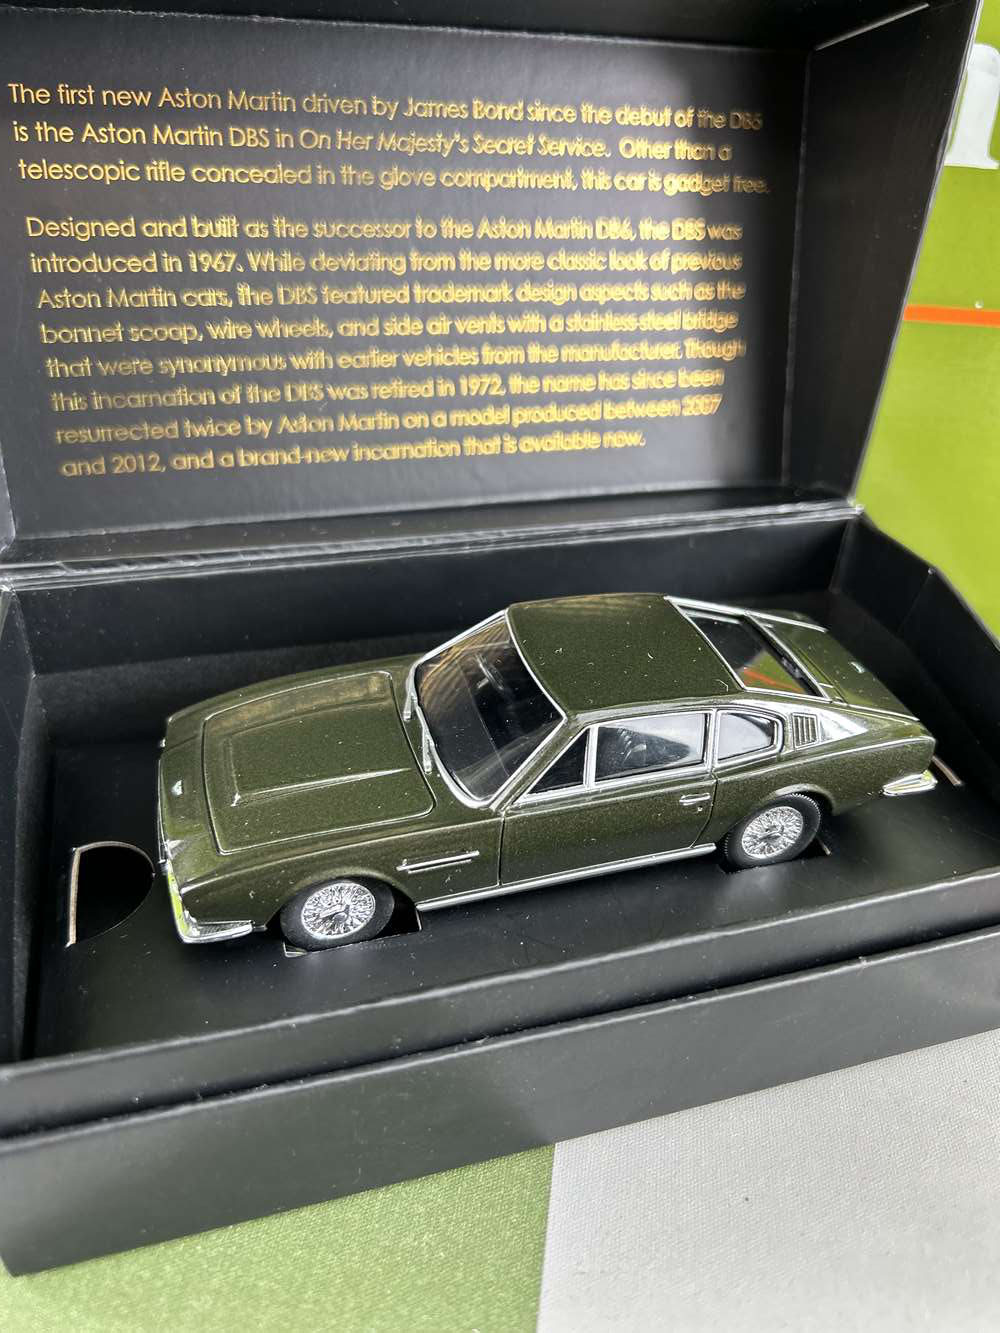 James Bond 007-1969 Aston Martin DBS - Image 2 of 6